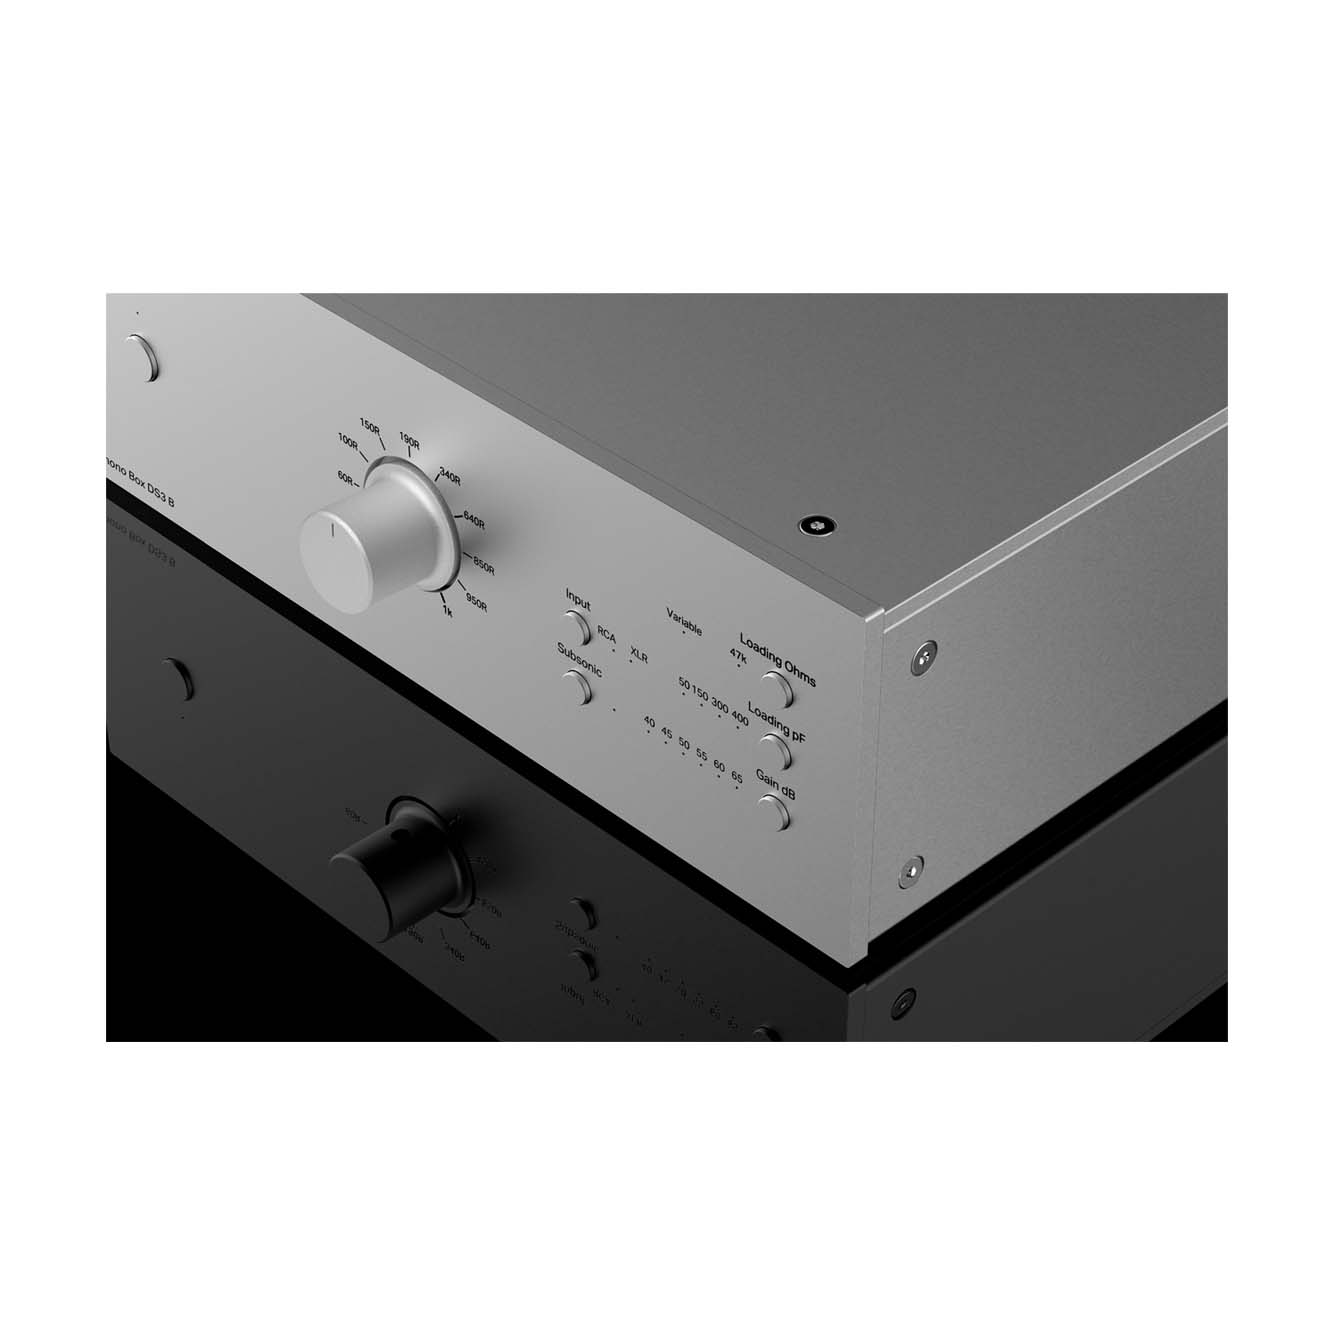 Pro-Ject Phono Box DS3 B Phono Pre-amplifier - Silver